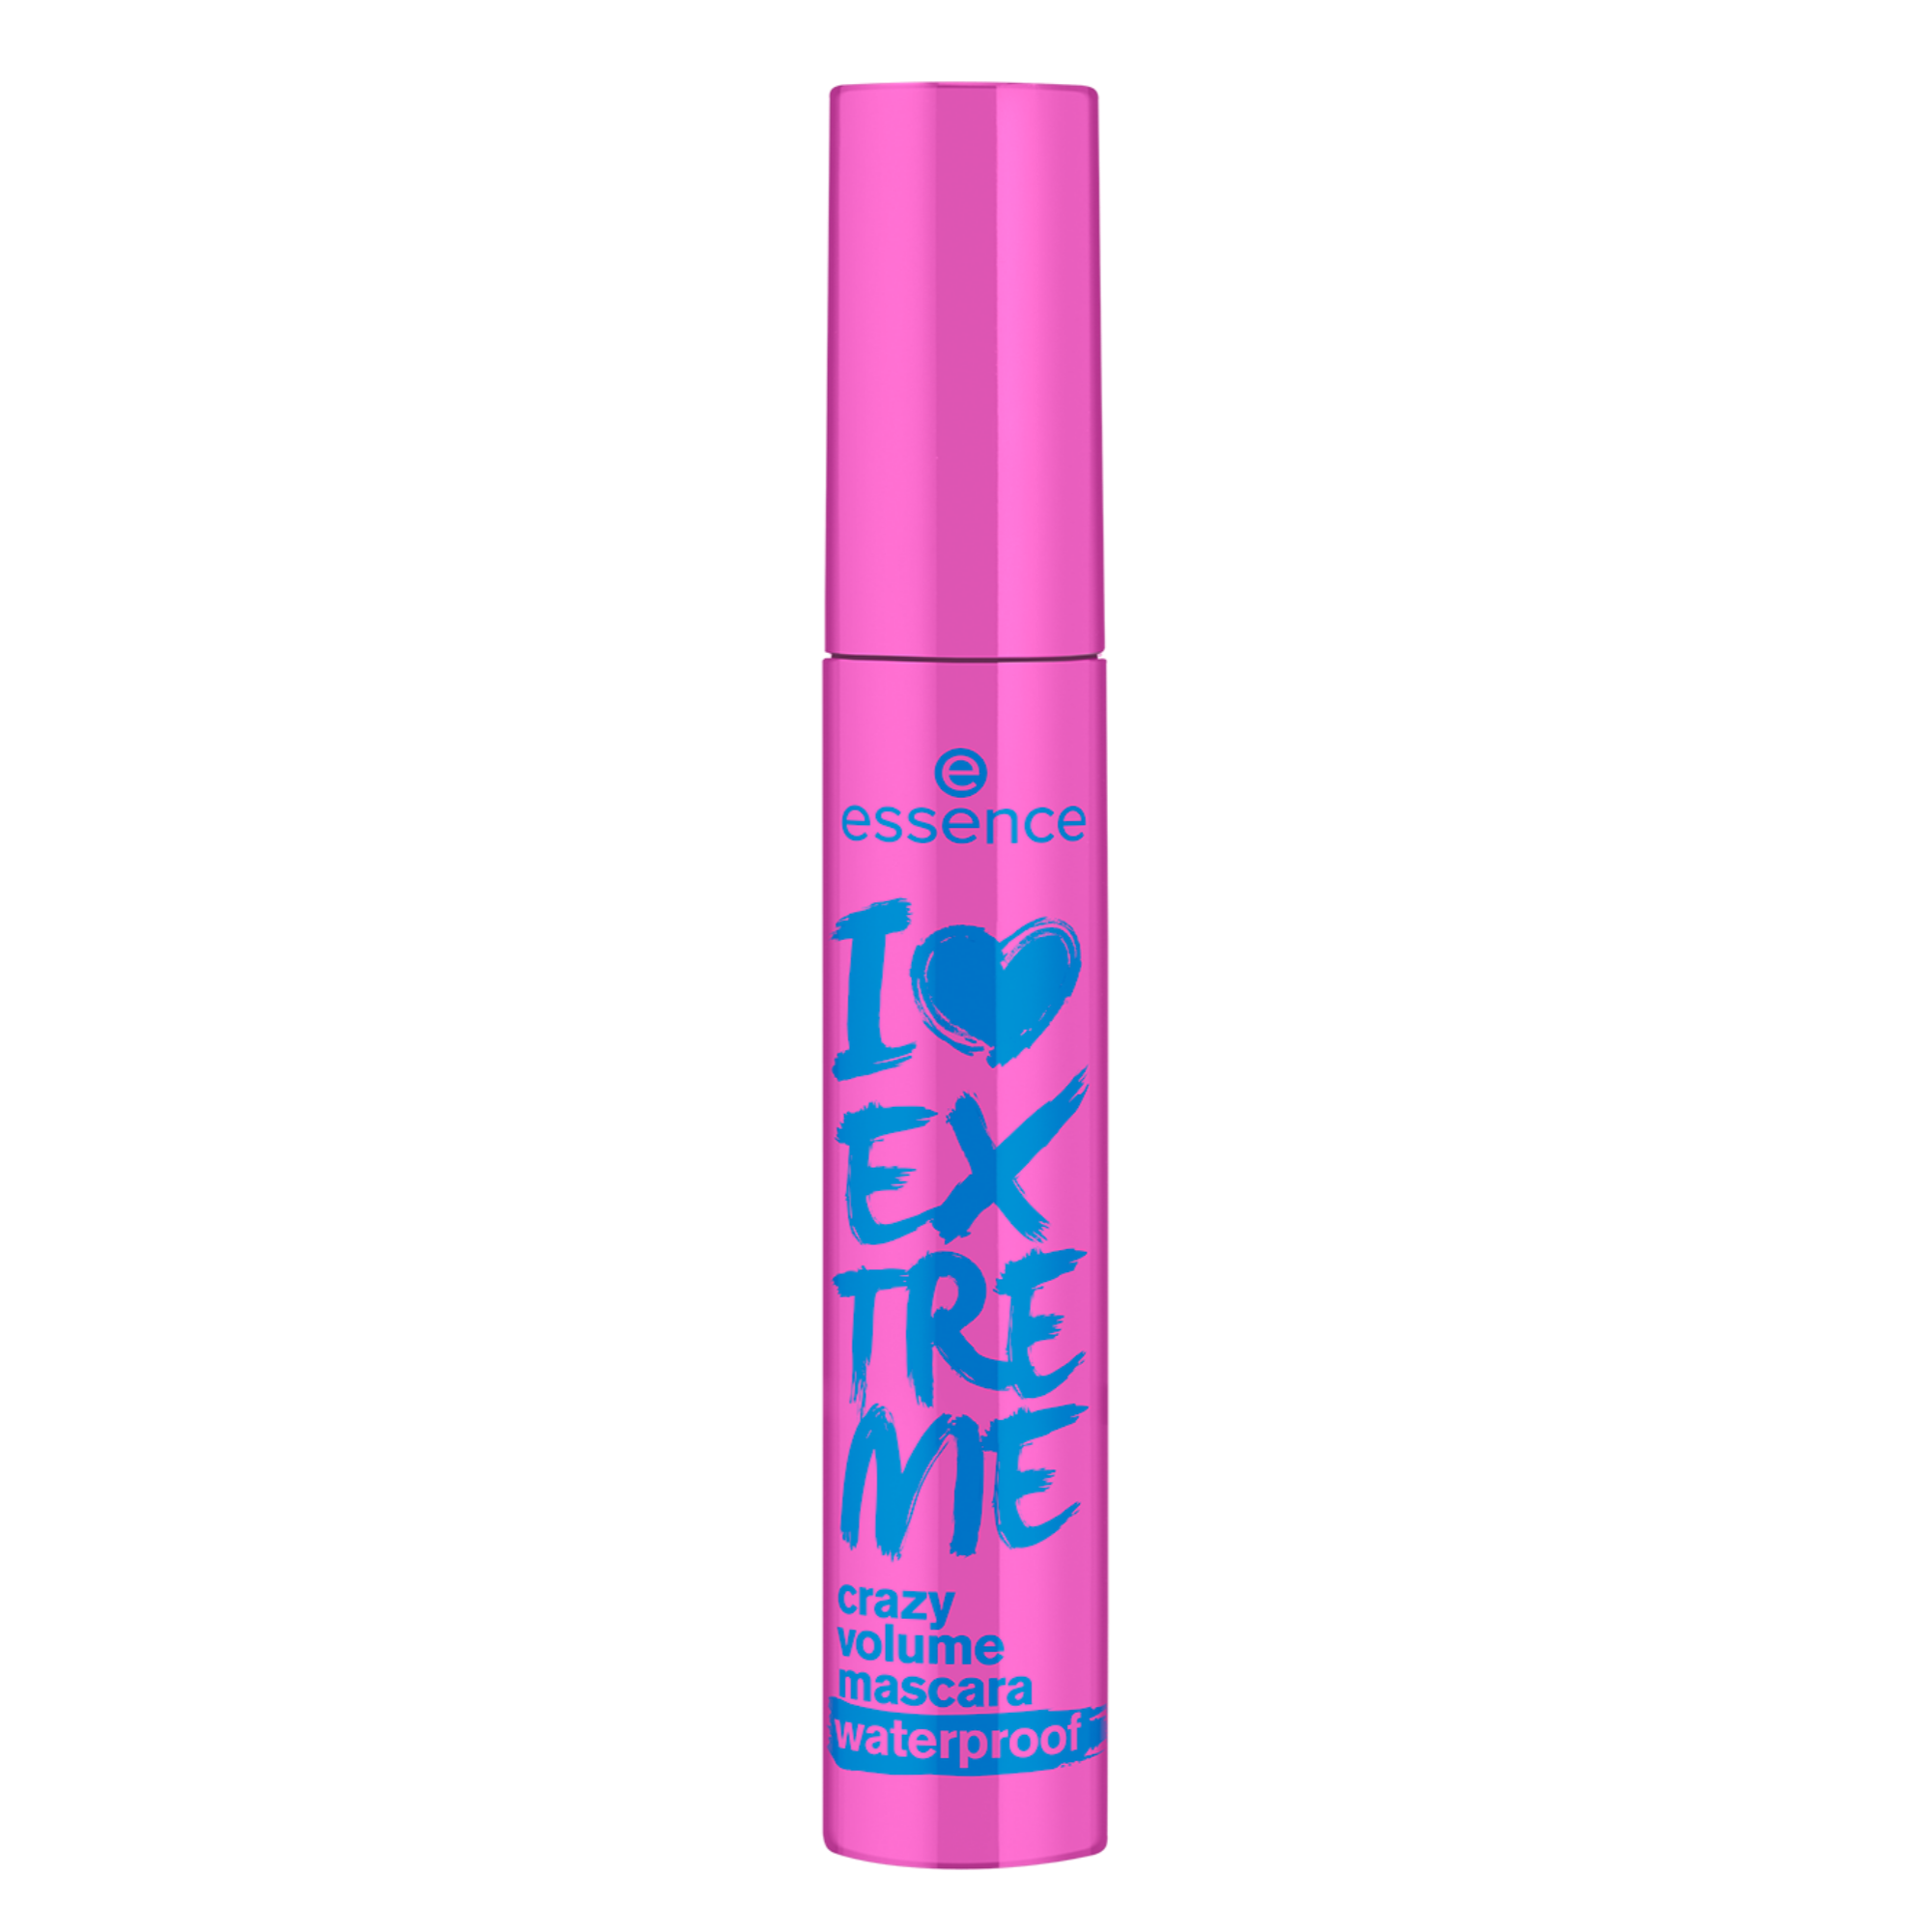 I love extreme crazy volume mascara waterproof